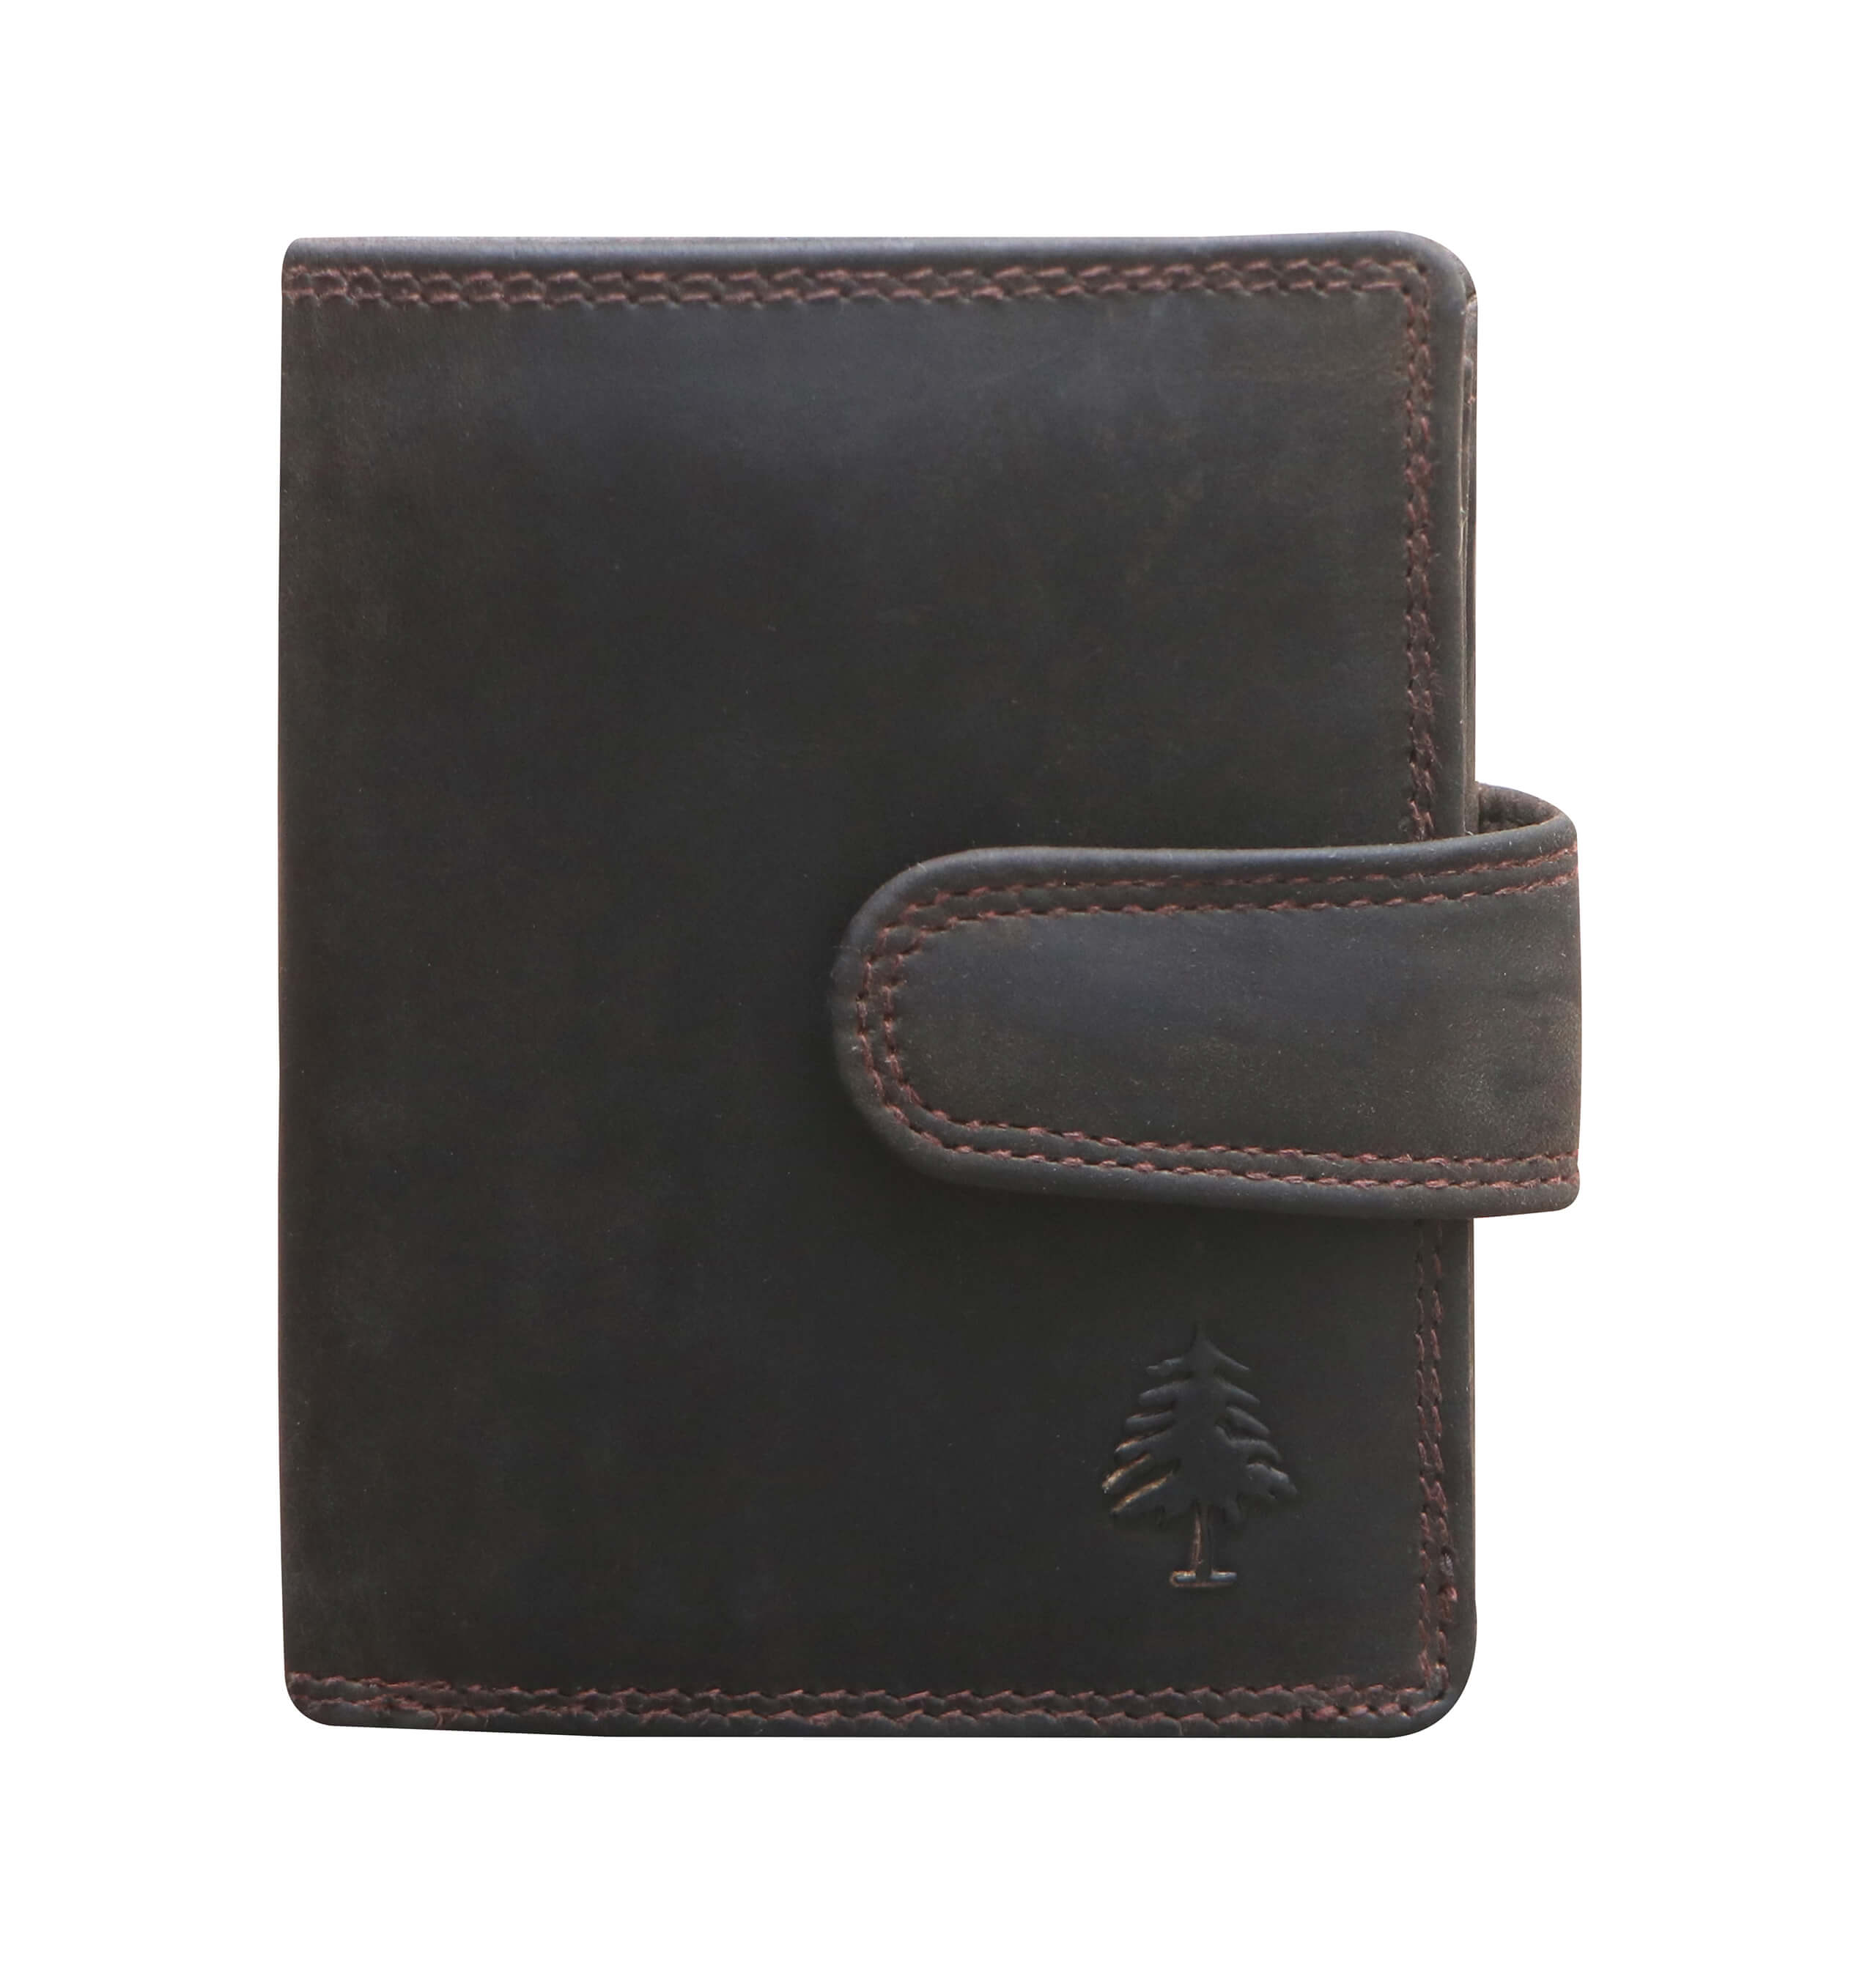 Men's small wrist bag in leather wristlet handbag Thomas 7